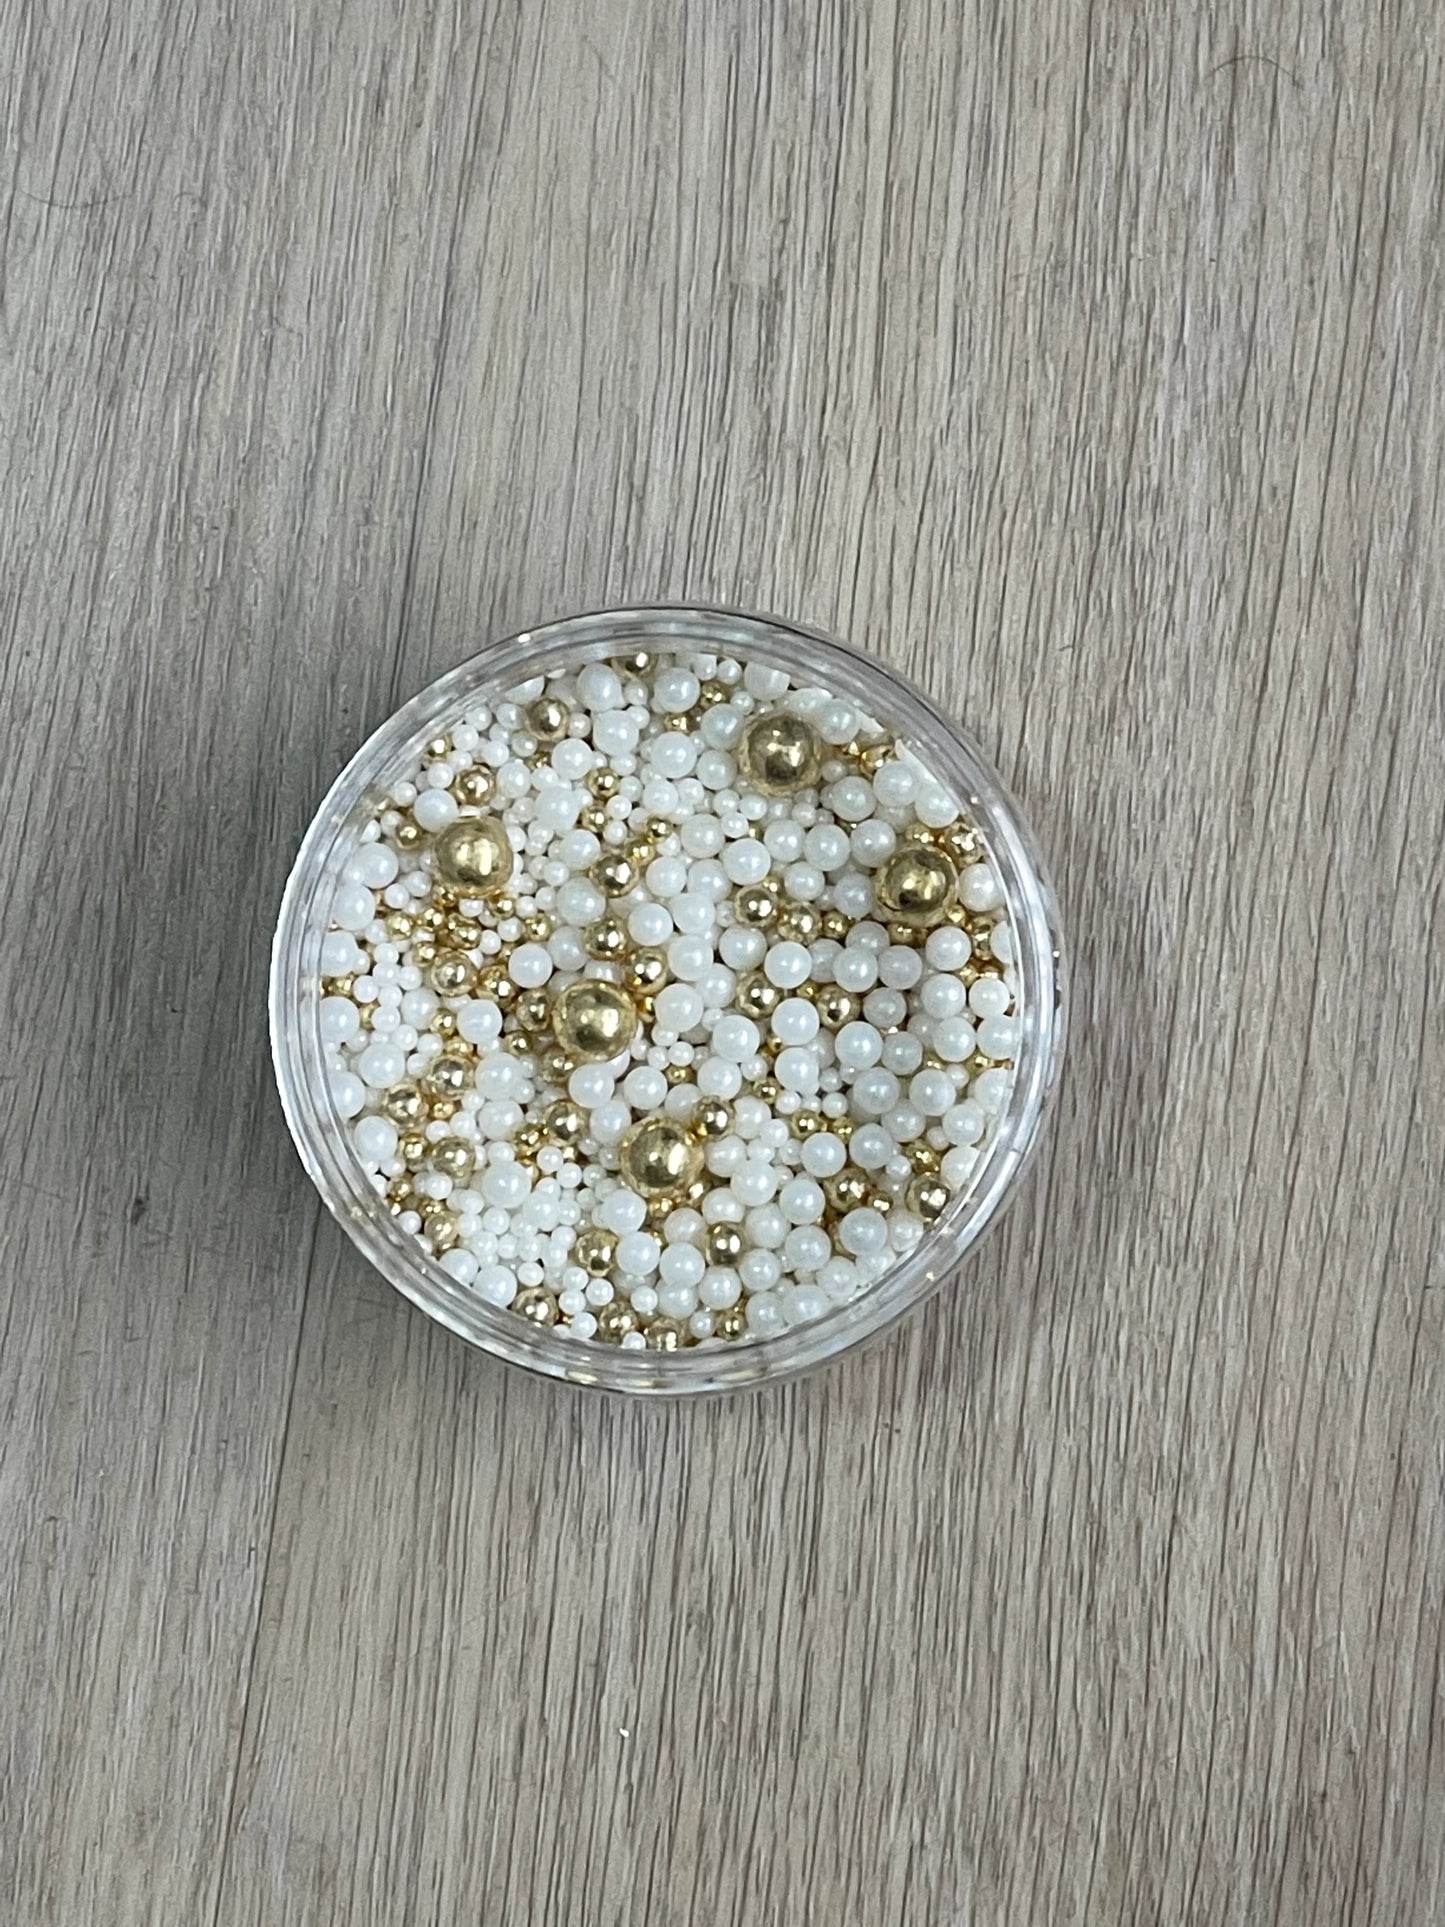 White And Gold Cake Sprinkles